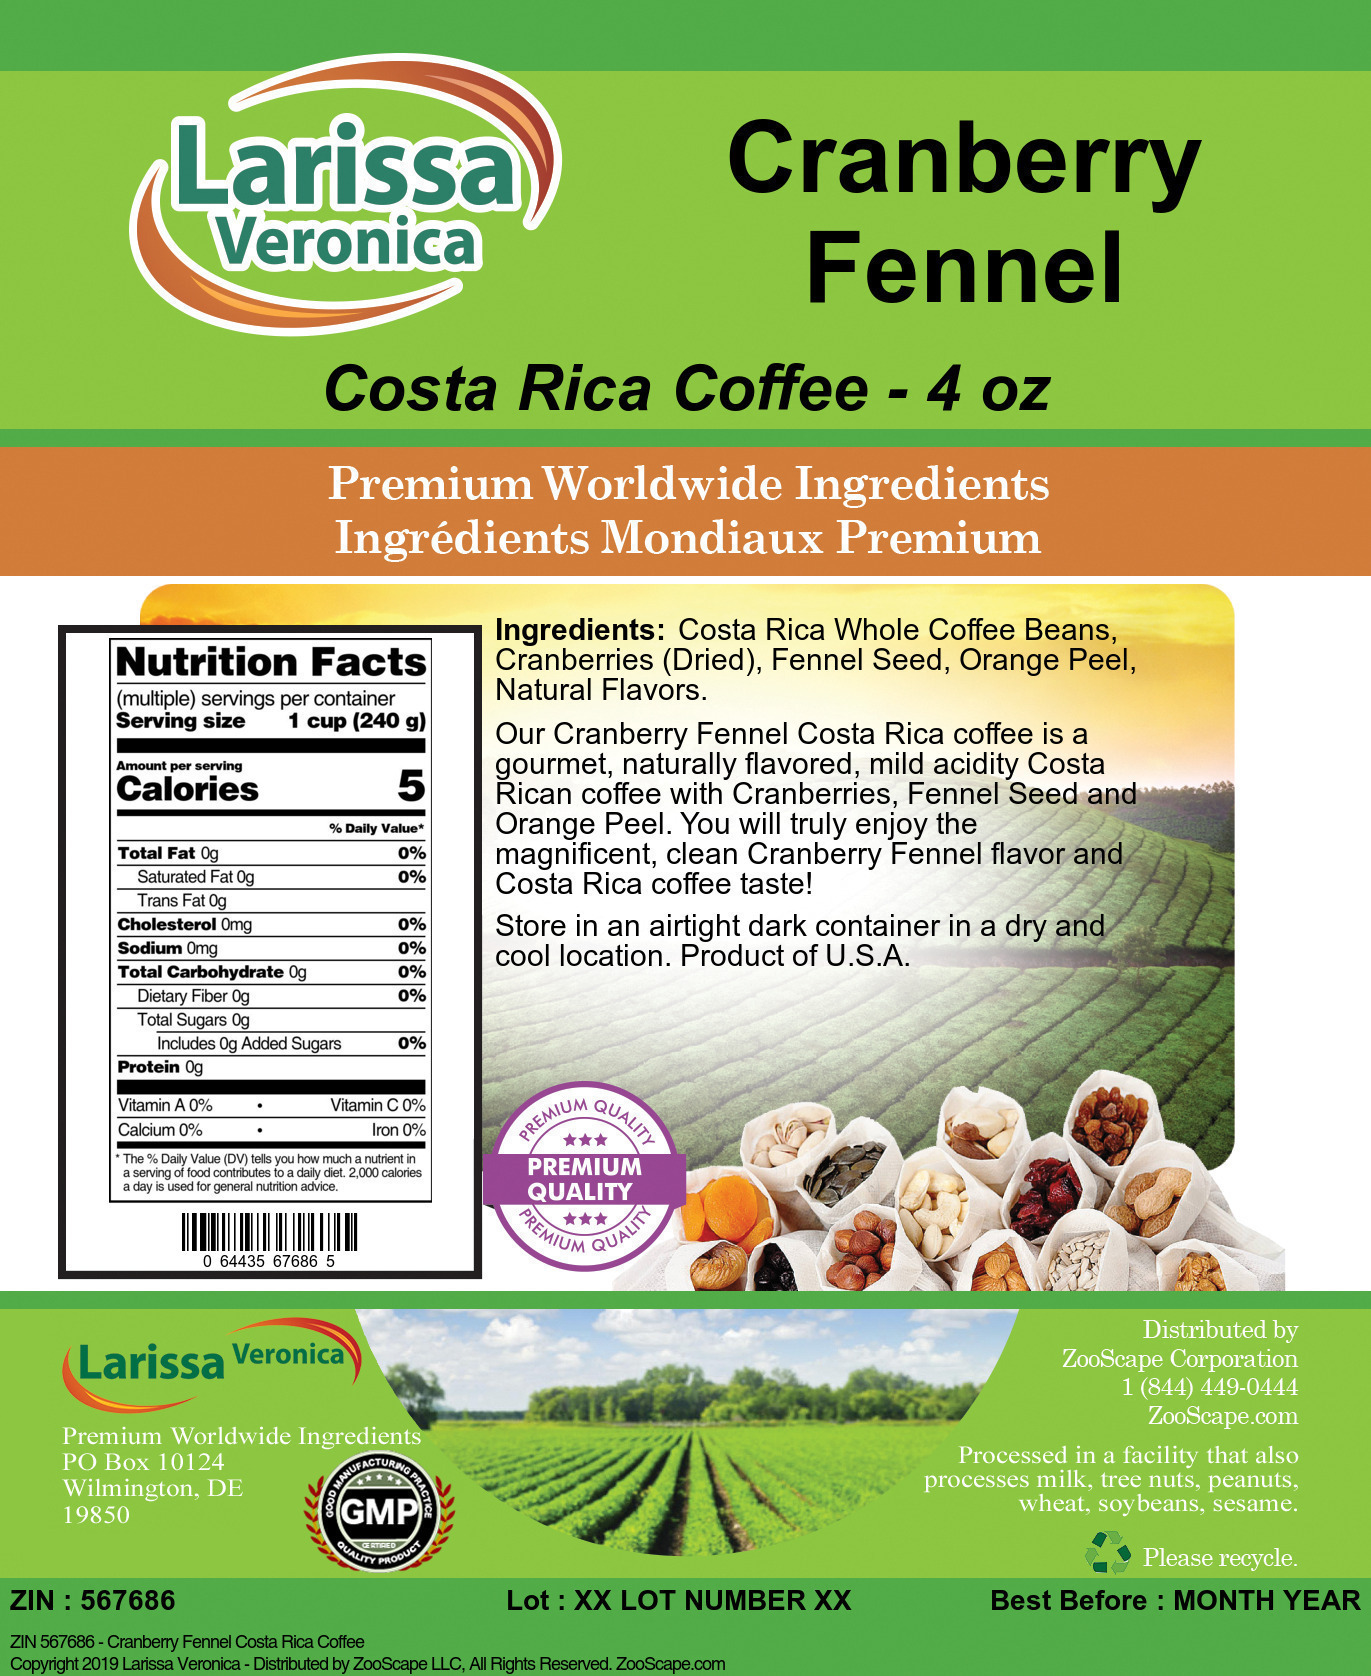 Cranberry Fennel Costa Rica Coffee - Label